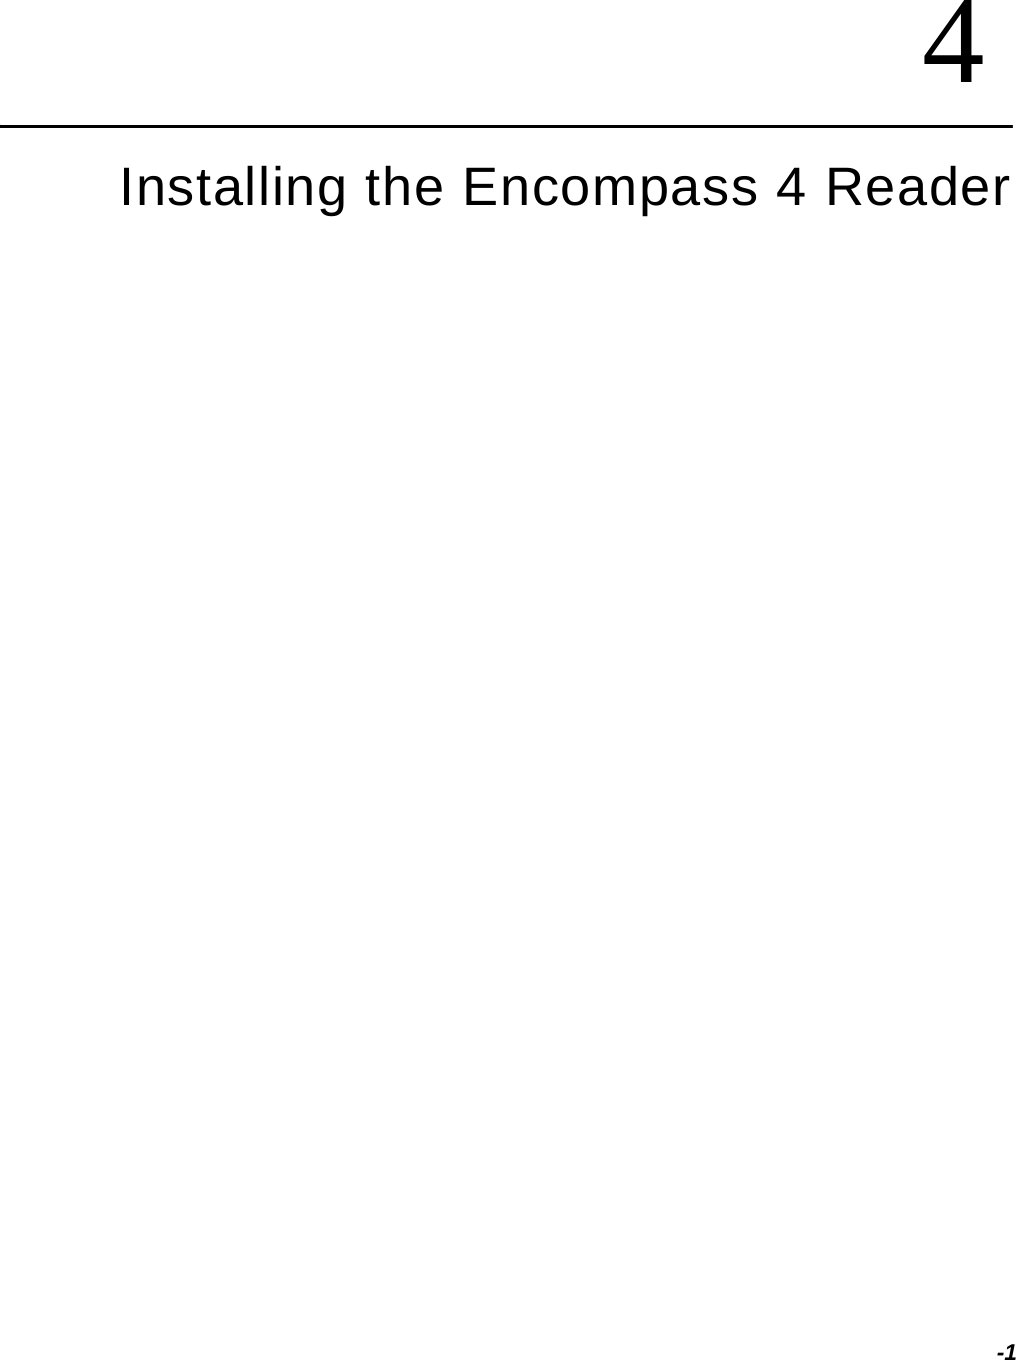 -14Installing the Encompass 4 Reader